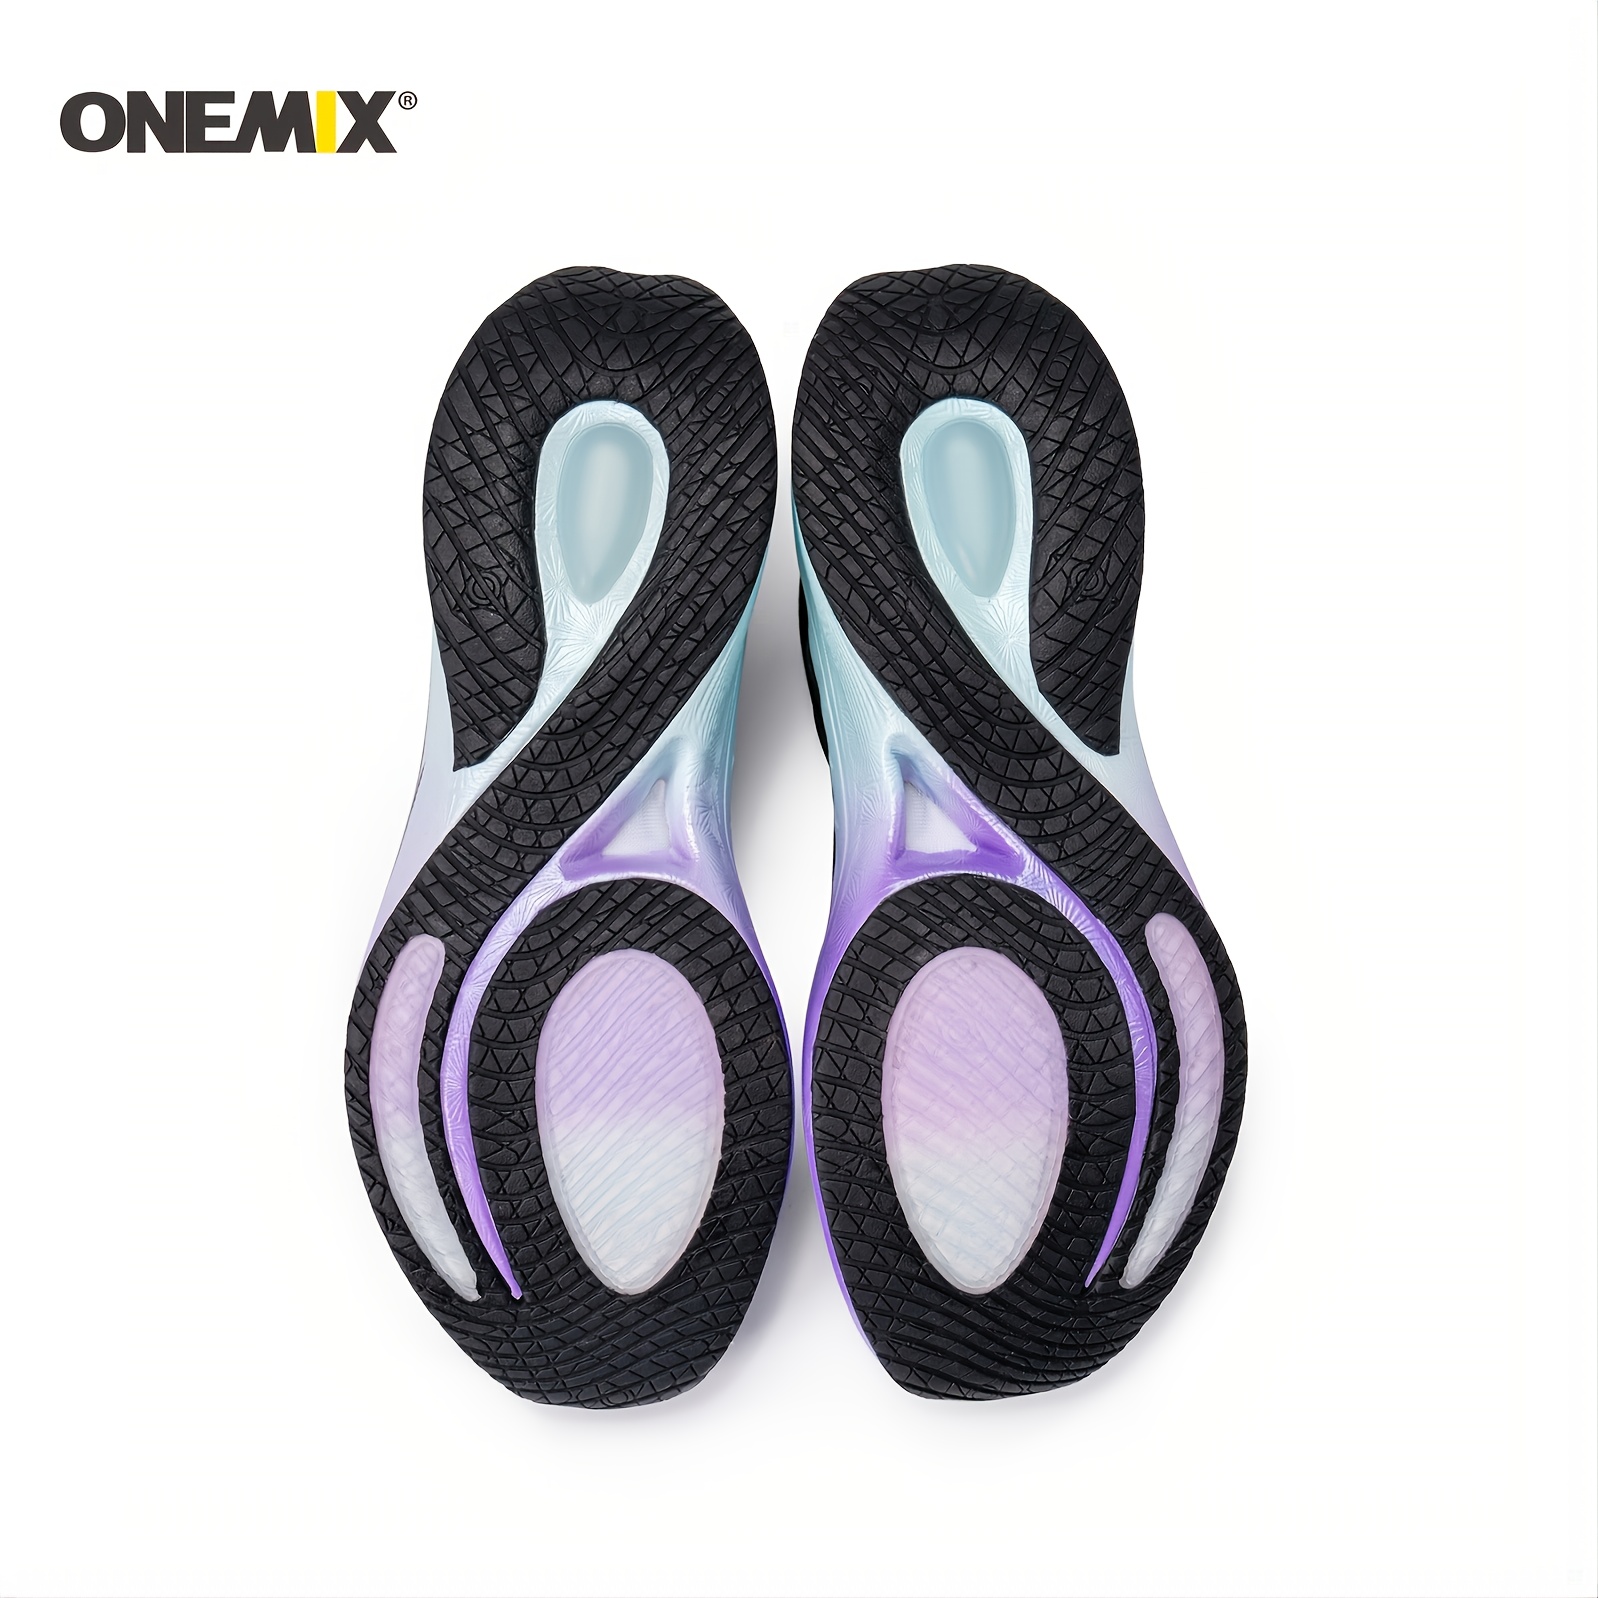 ONEMIX-Zapatillas deportivas para hombre, calzado deportivo para correr,  con música y ritmo, de malla transpirable, para exteriores, ligeras, talla  EU 39-47 